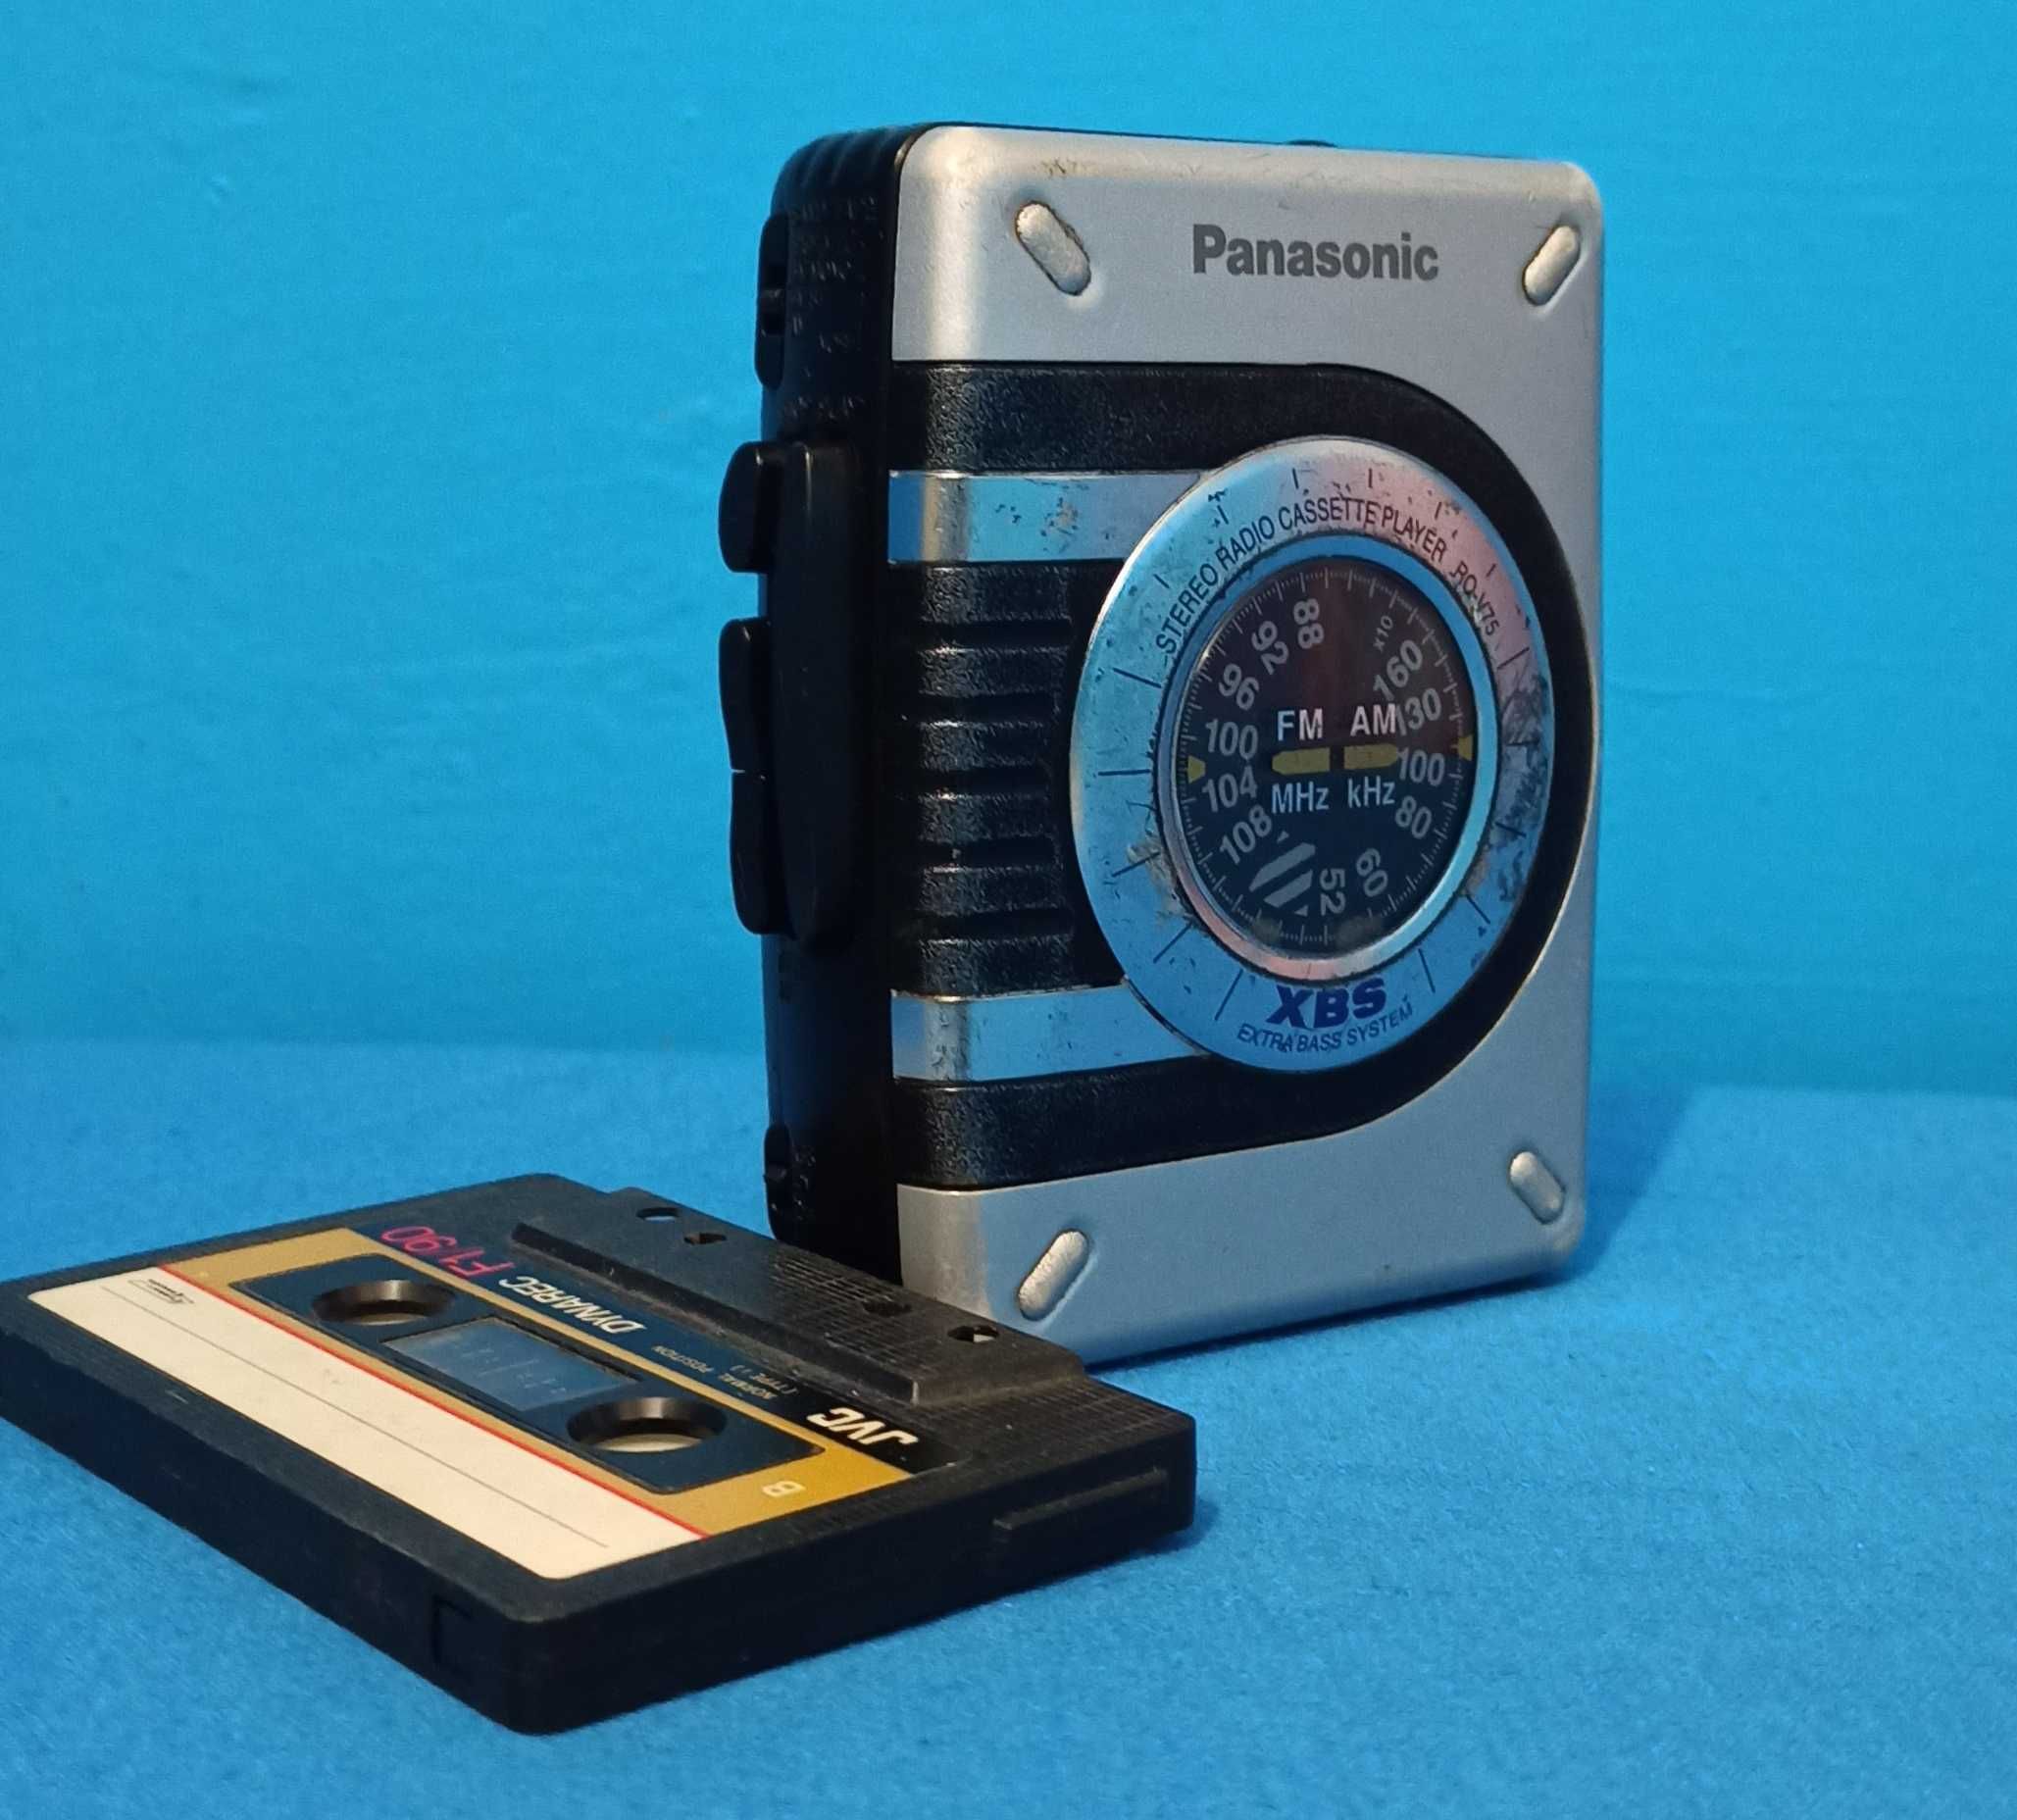 Плеер кассетный Panasonic RQ-V75